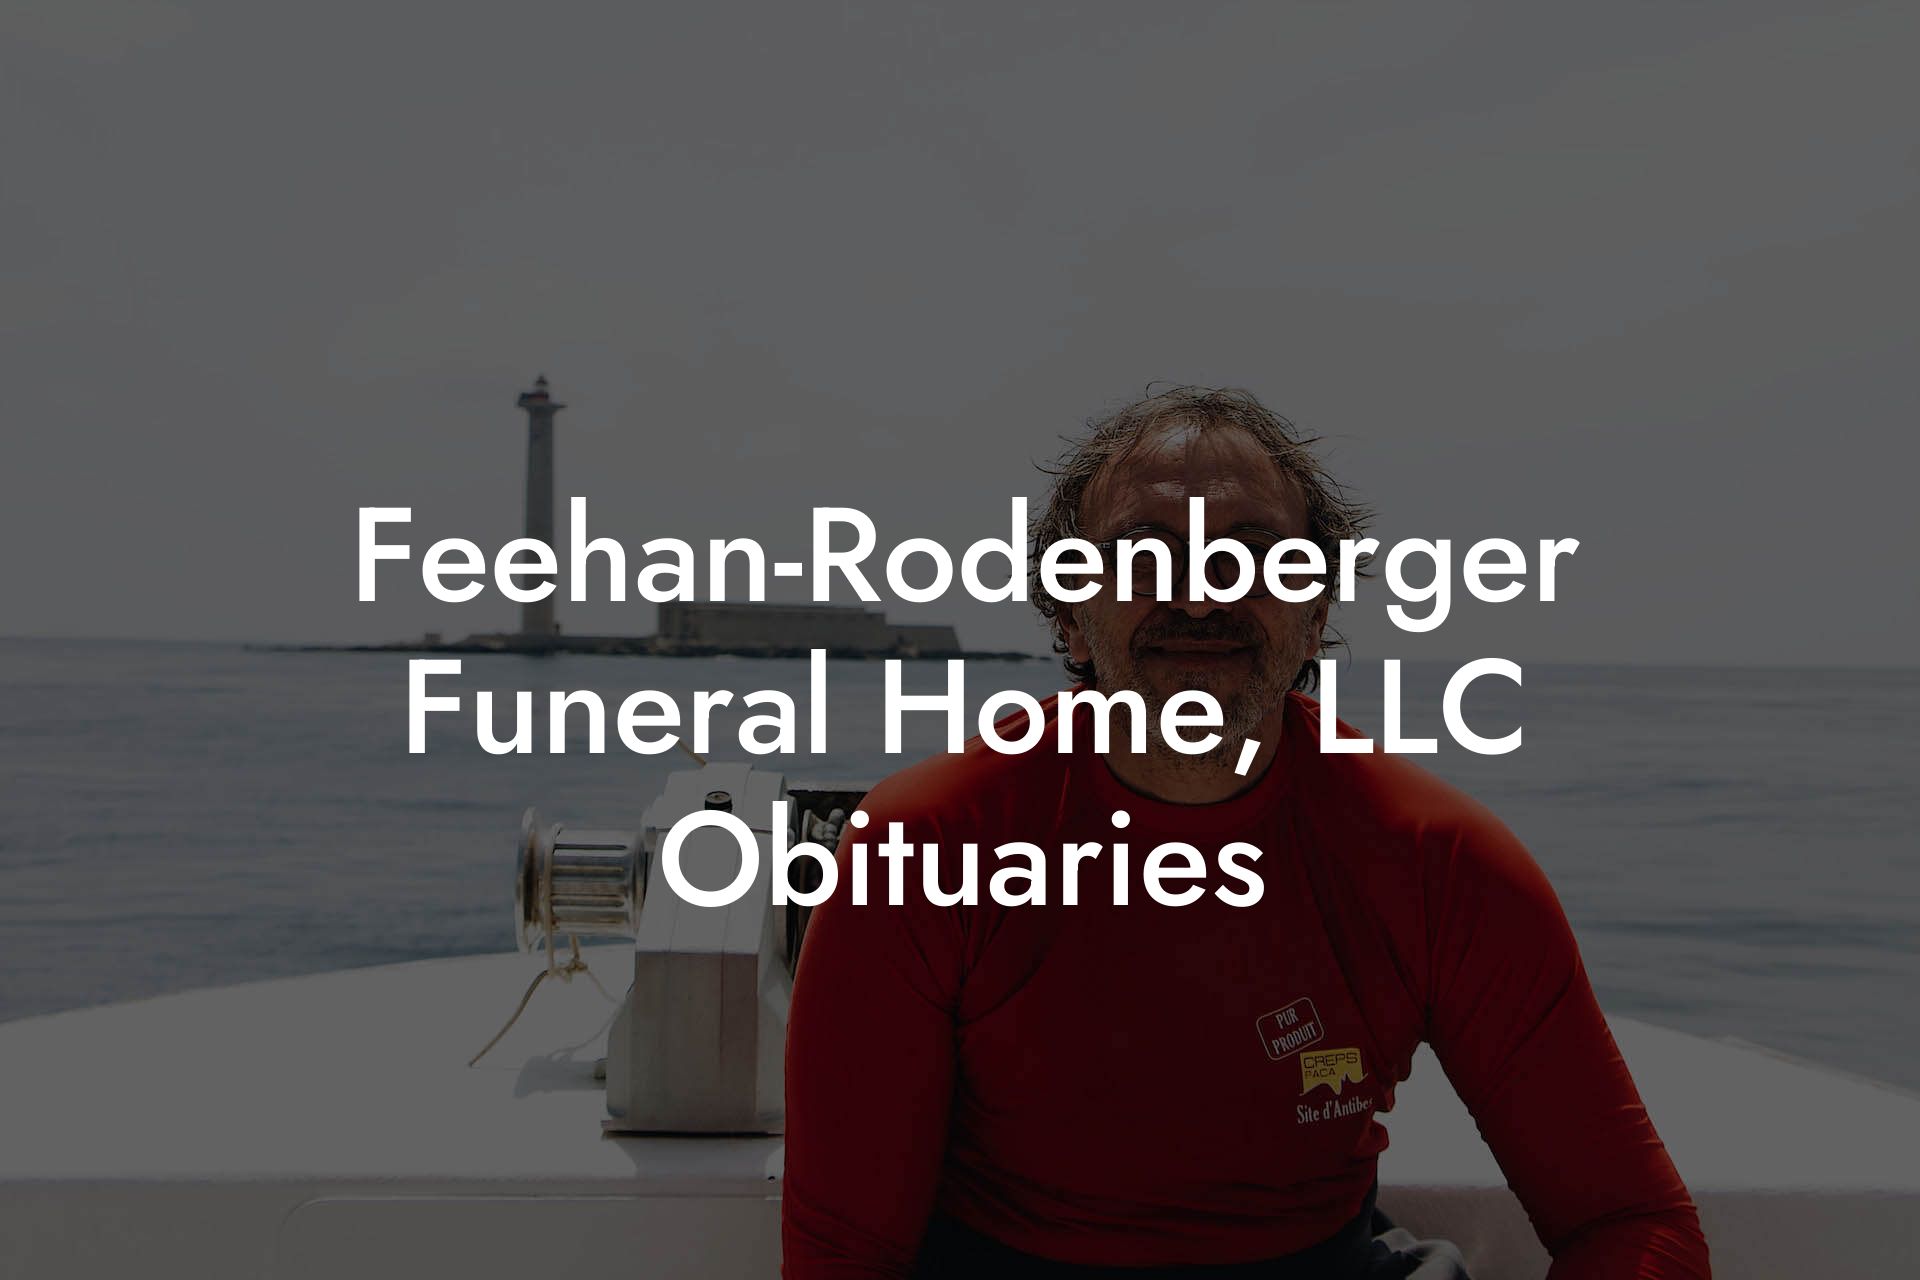 Feehan-Rodenberger Funeral Home, LLC Obituaries